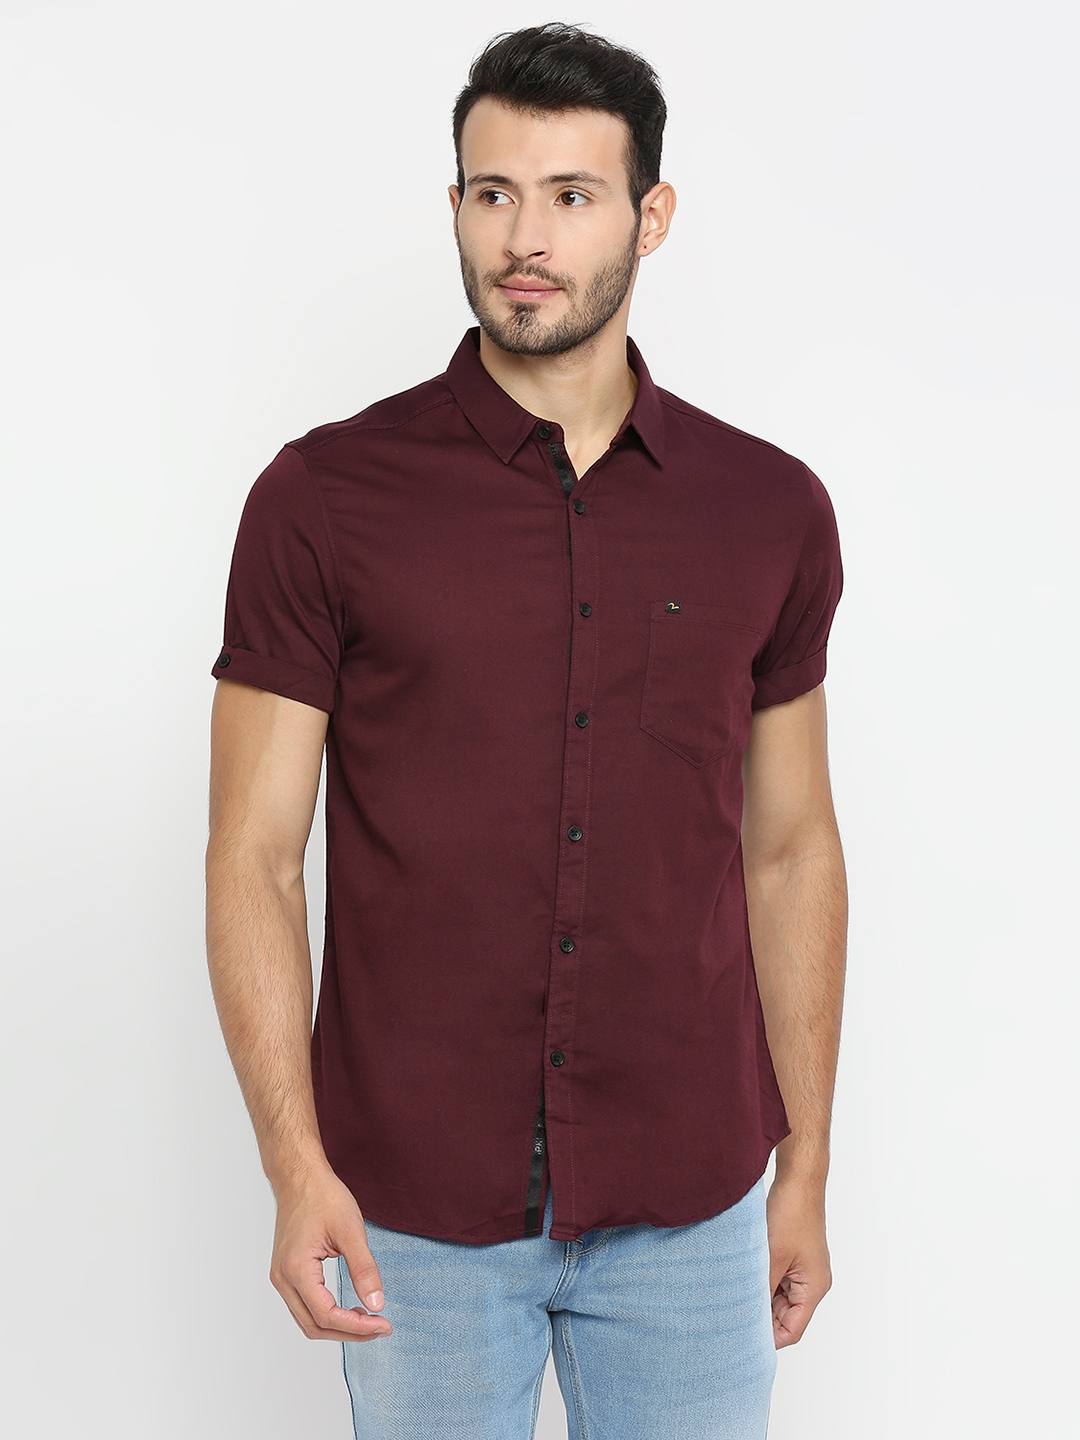 Spykar | Spykar Wine Red Cotton Half Sleeve Plain Shirt For Men